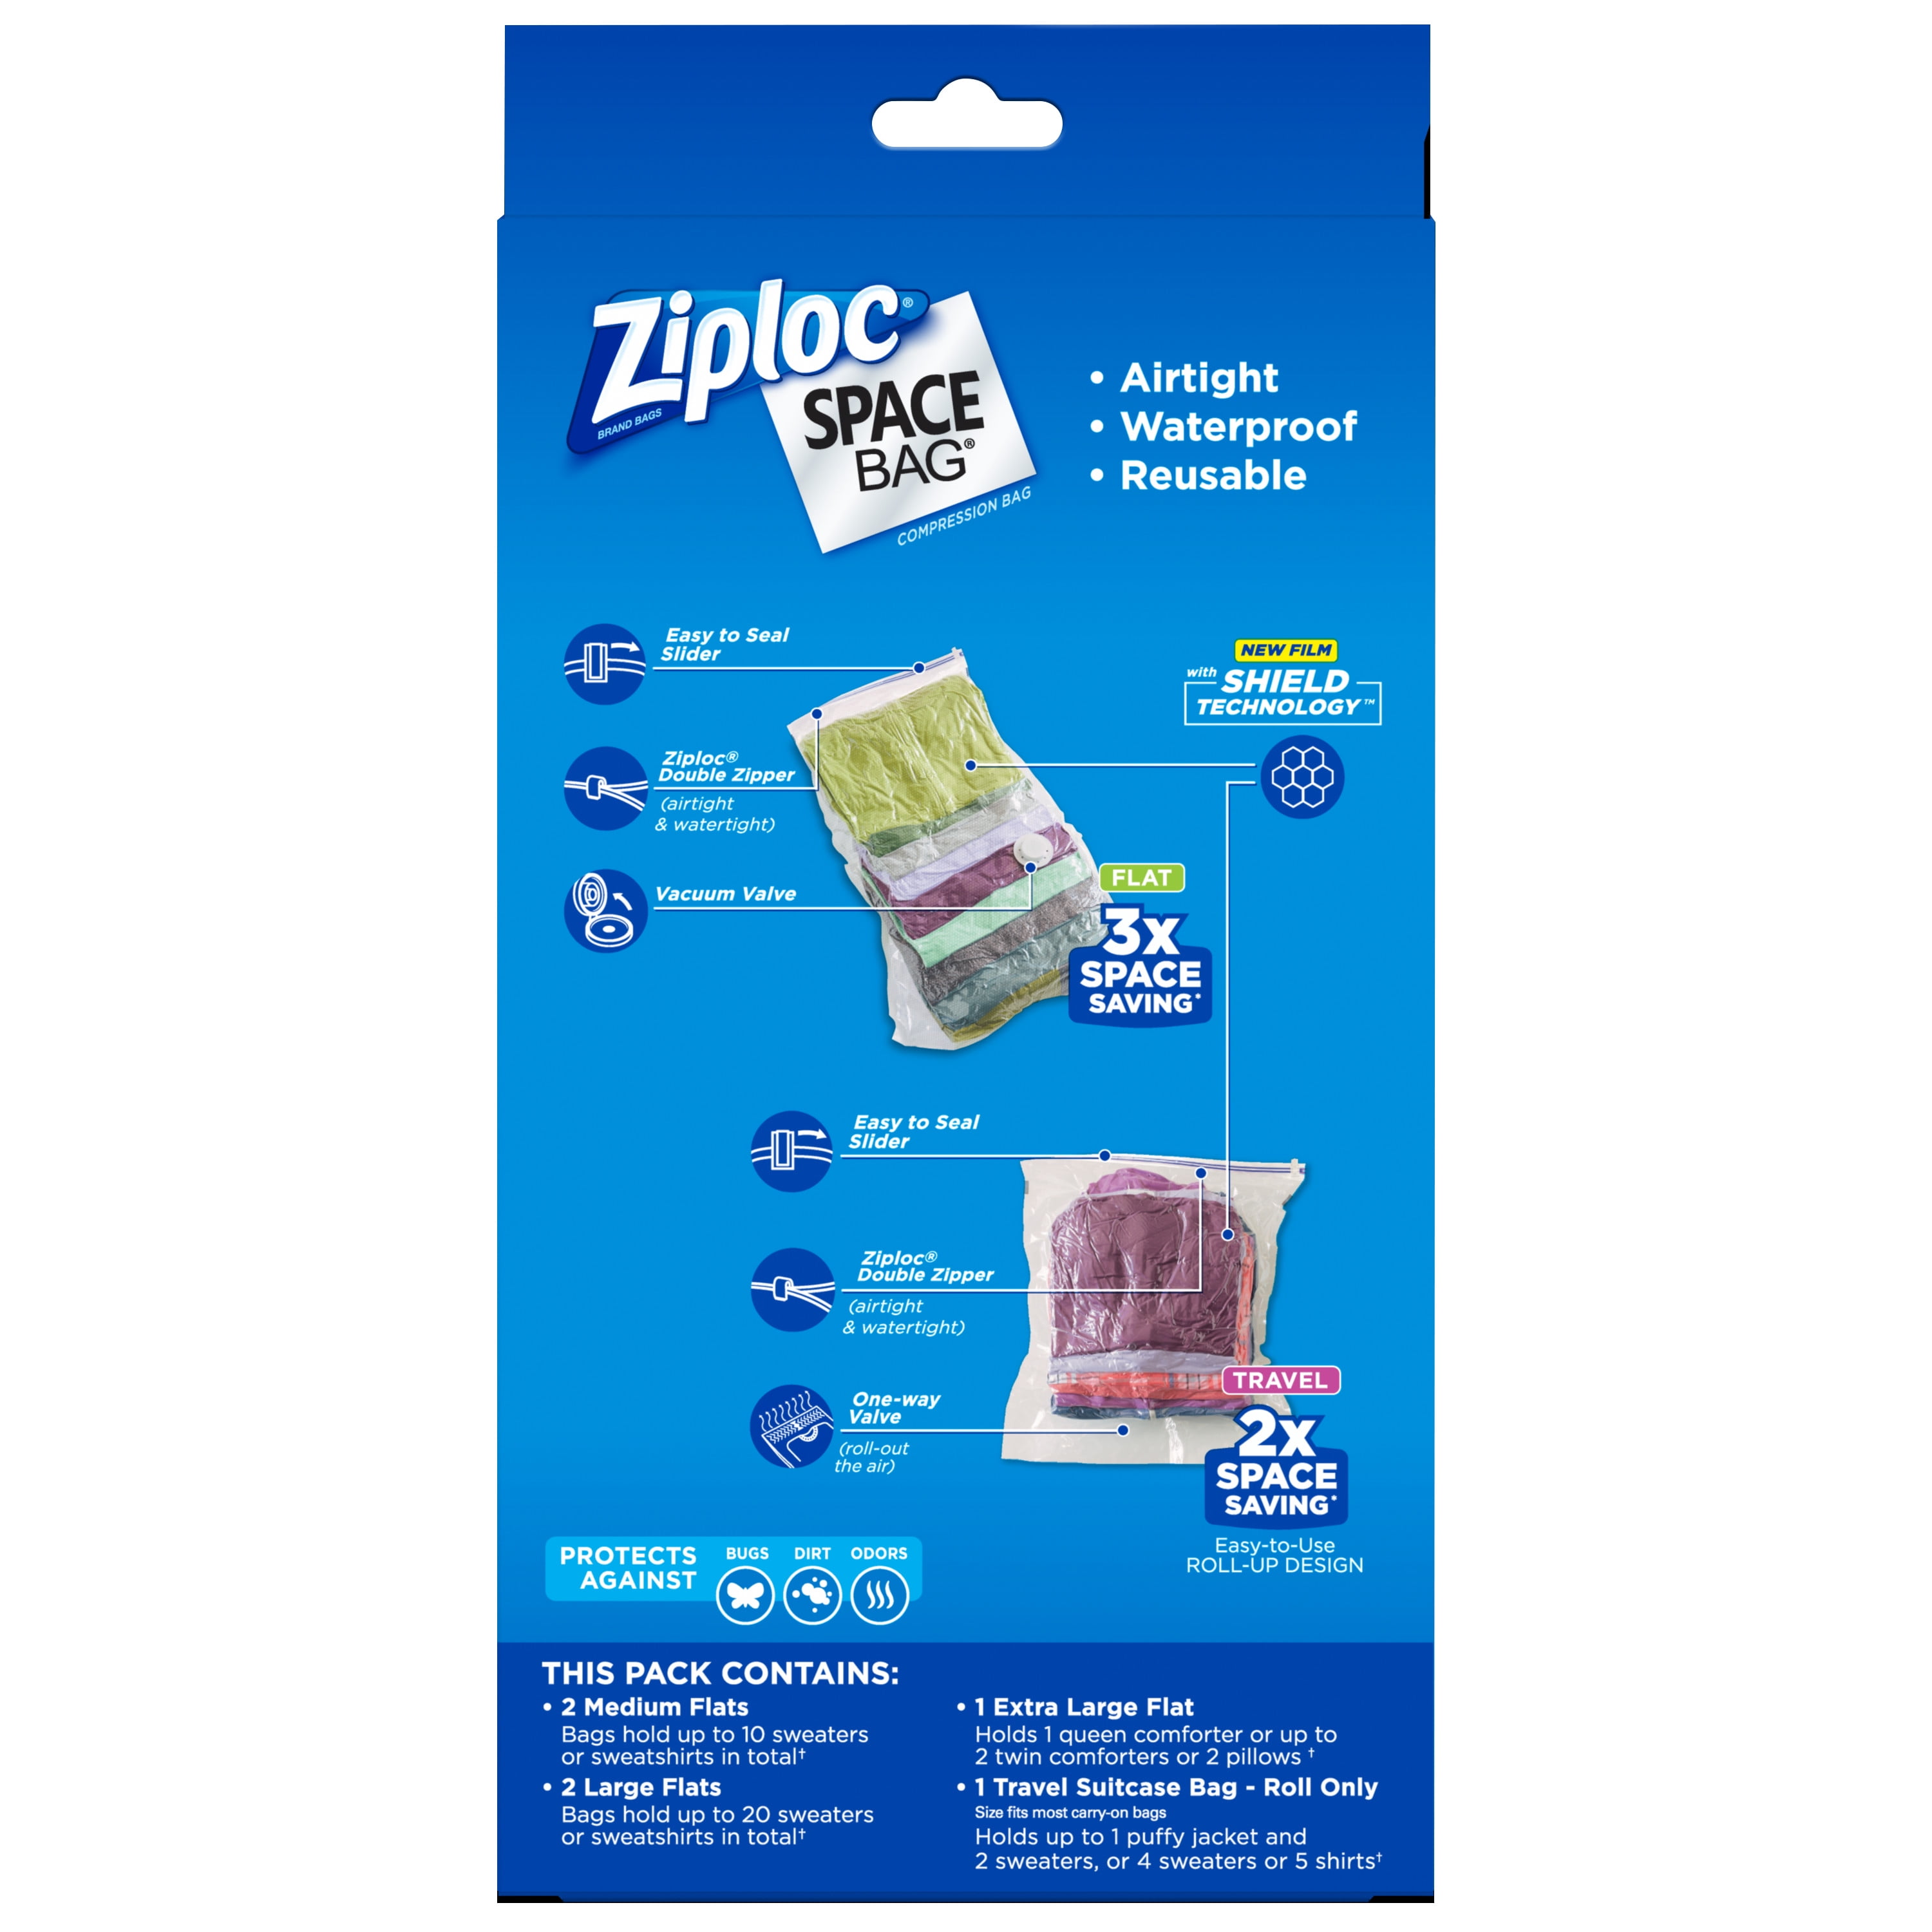 Ziploc Space Bag Vacuum Seal Variety Combo Storage Bag (6 Count